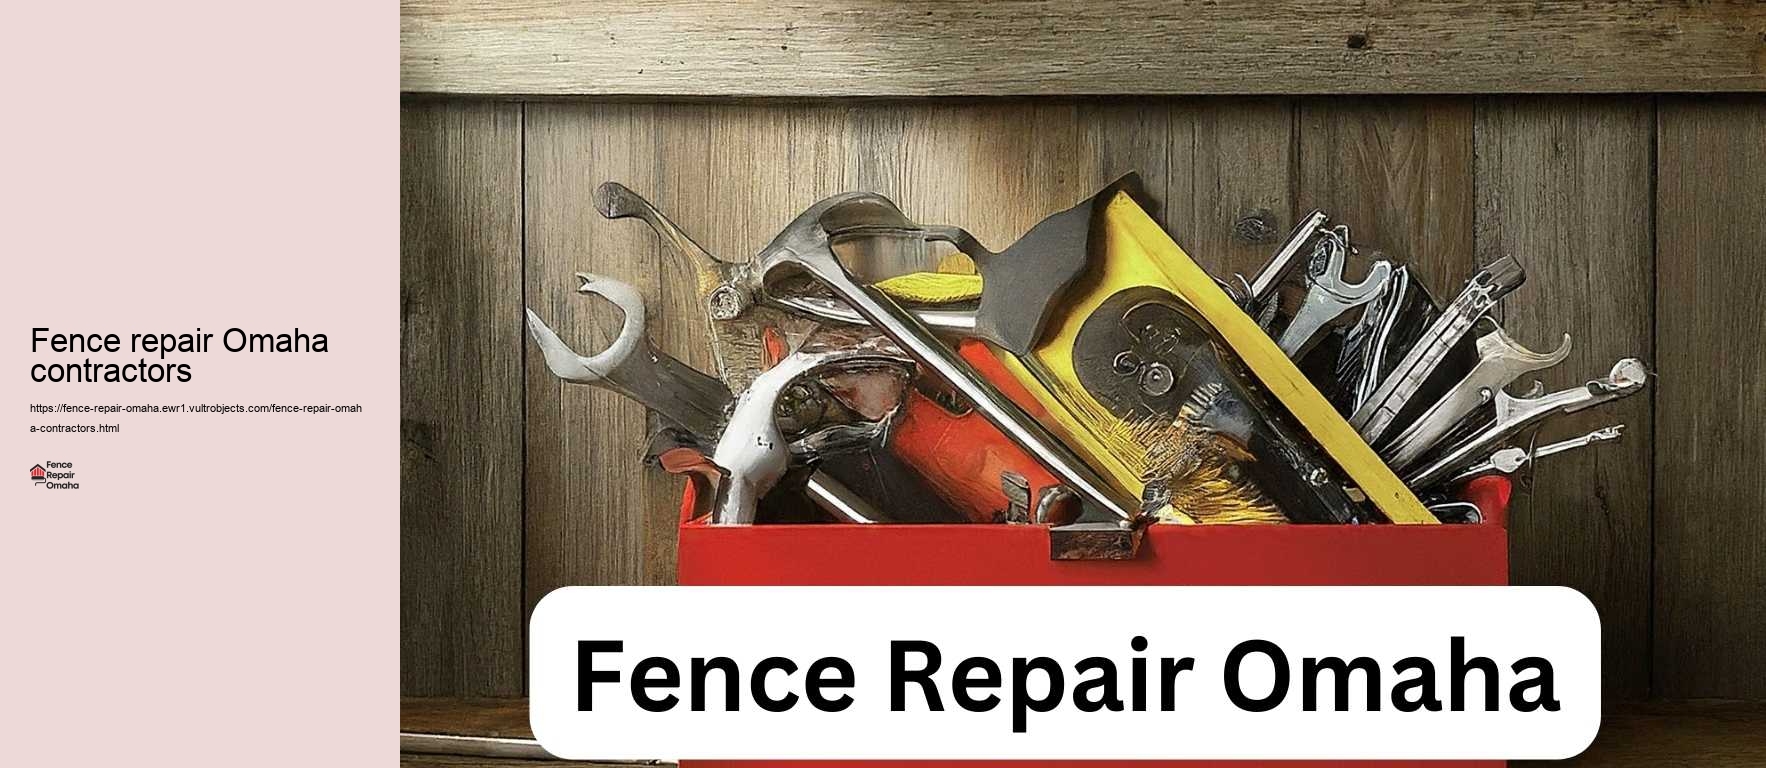 Fence repair Omaha contractors